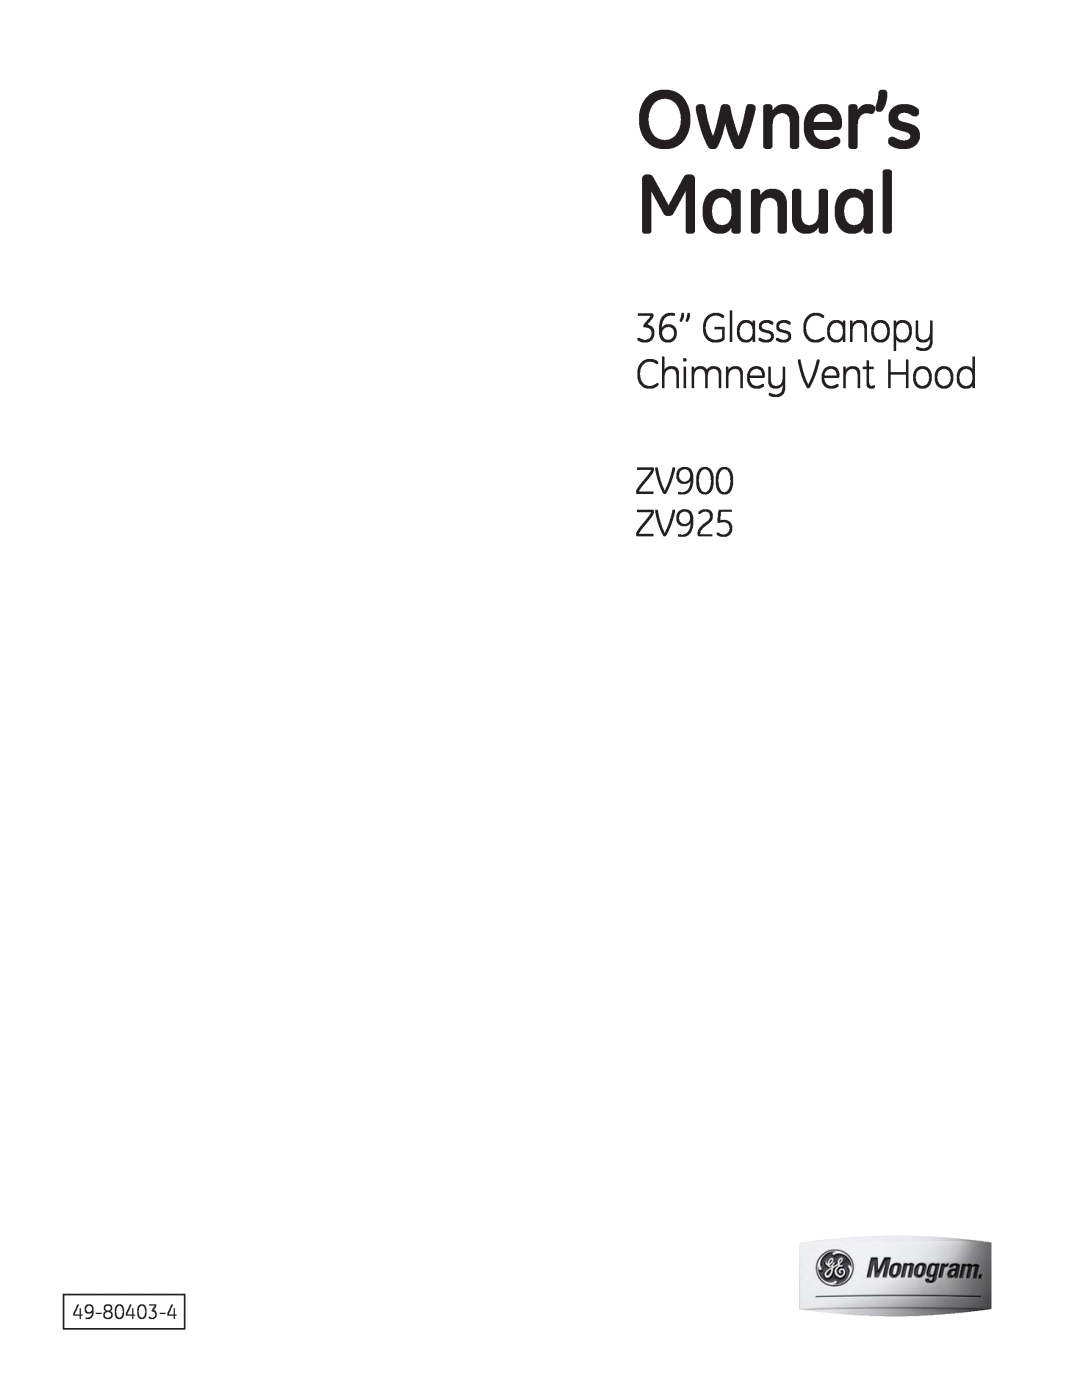 GE ZV900 installation instructions Installation Instructions, 36″ Glass Canopy Chimney Vent Hood, 04-06 JR 